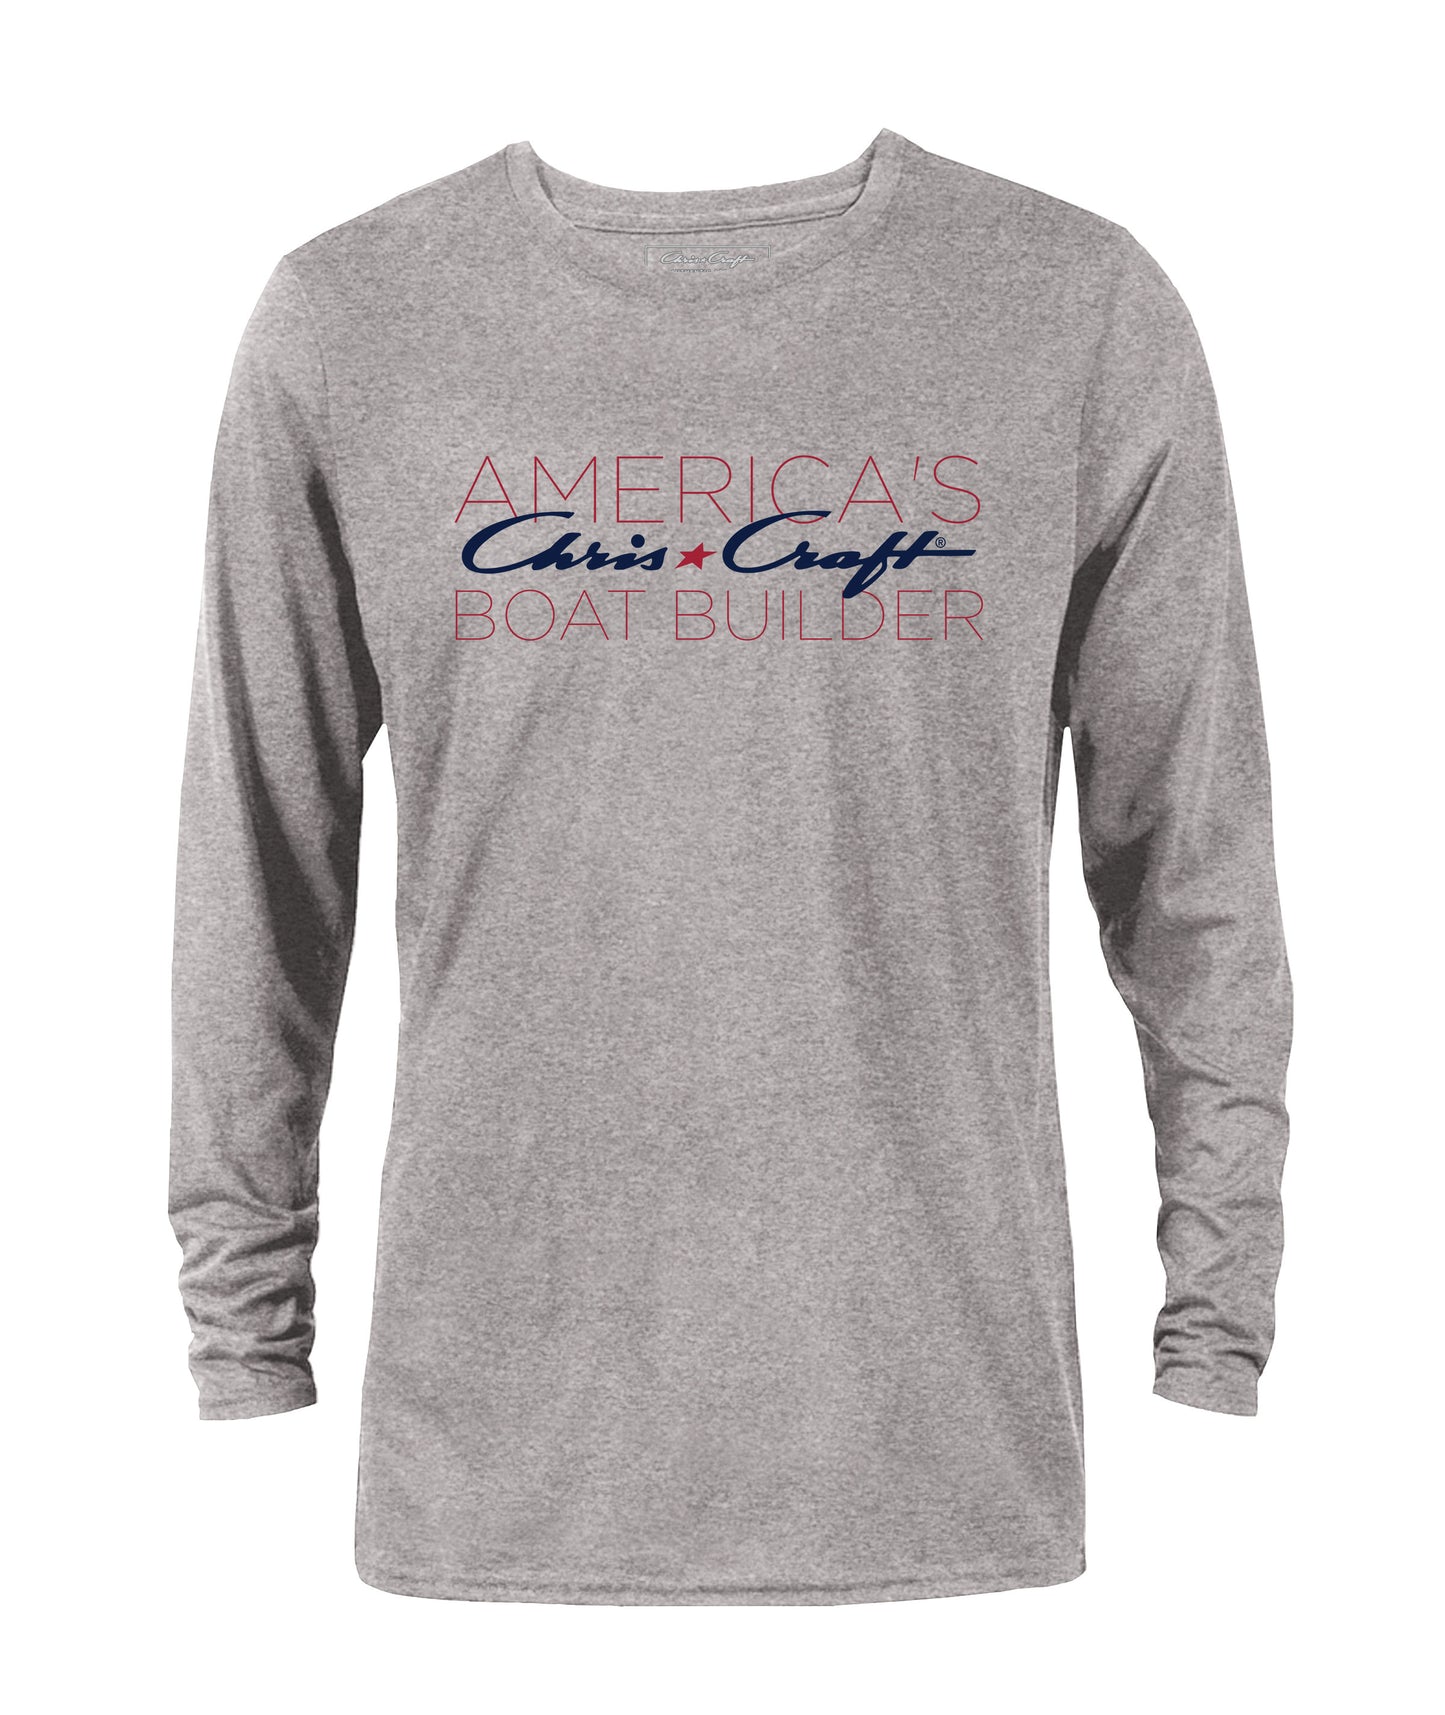 Chris-Craft America's Boat Builder Men's Longsleeve Shirt